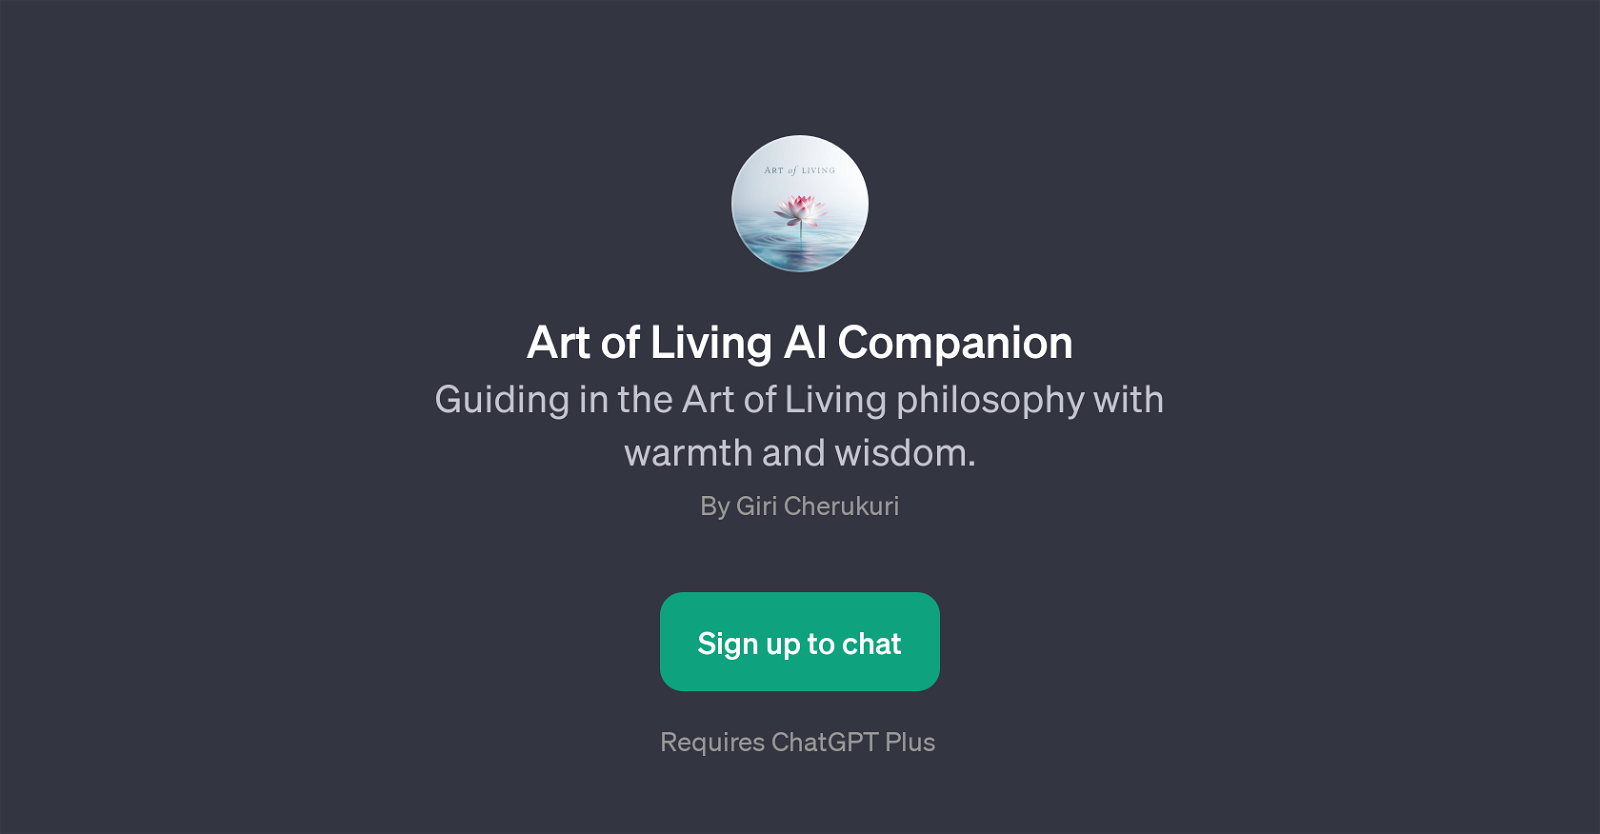 Art of Living AI Companion website